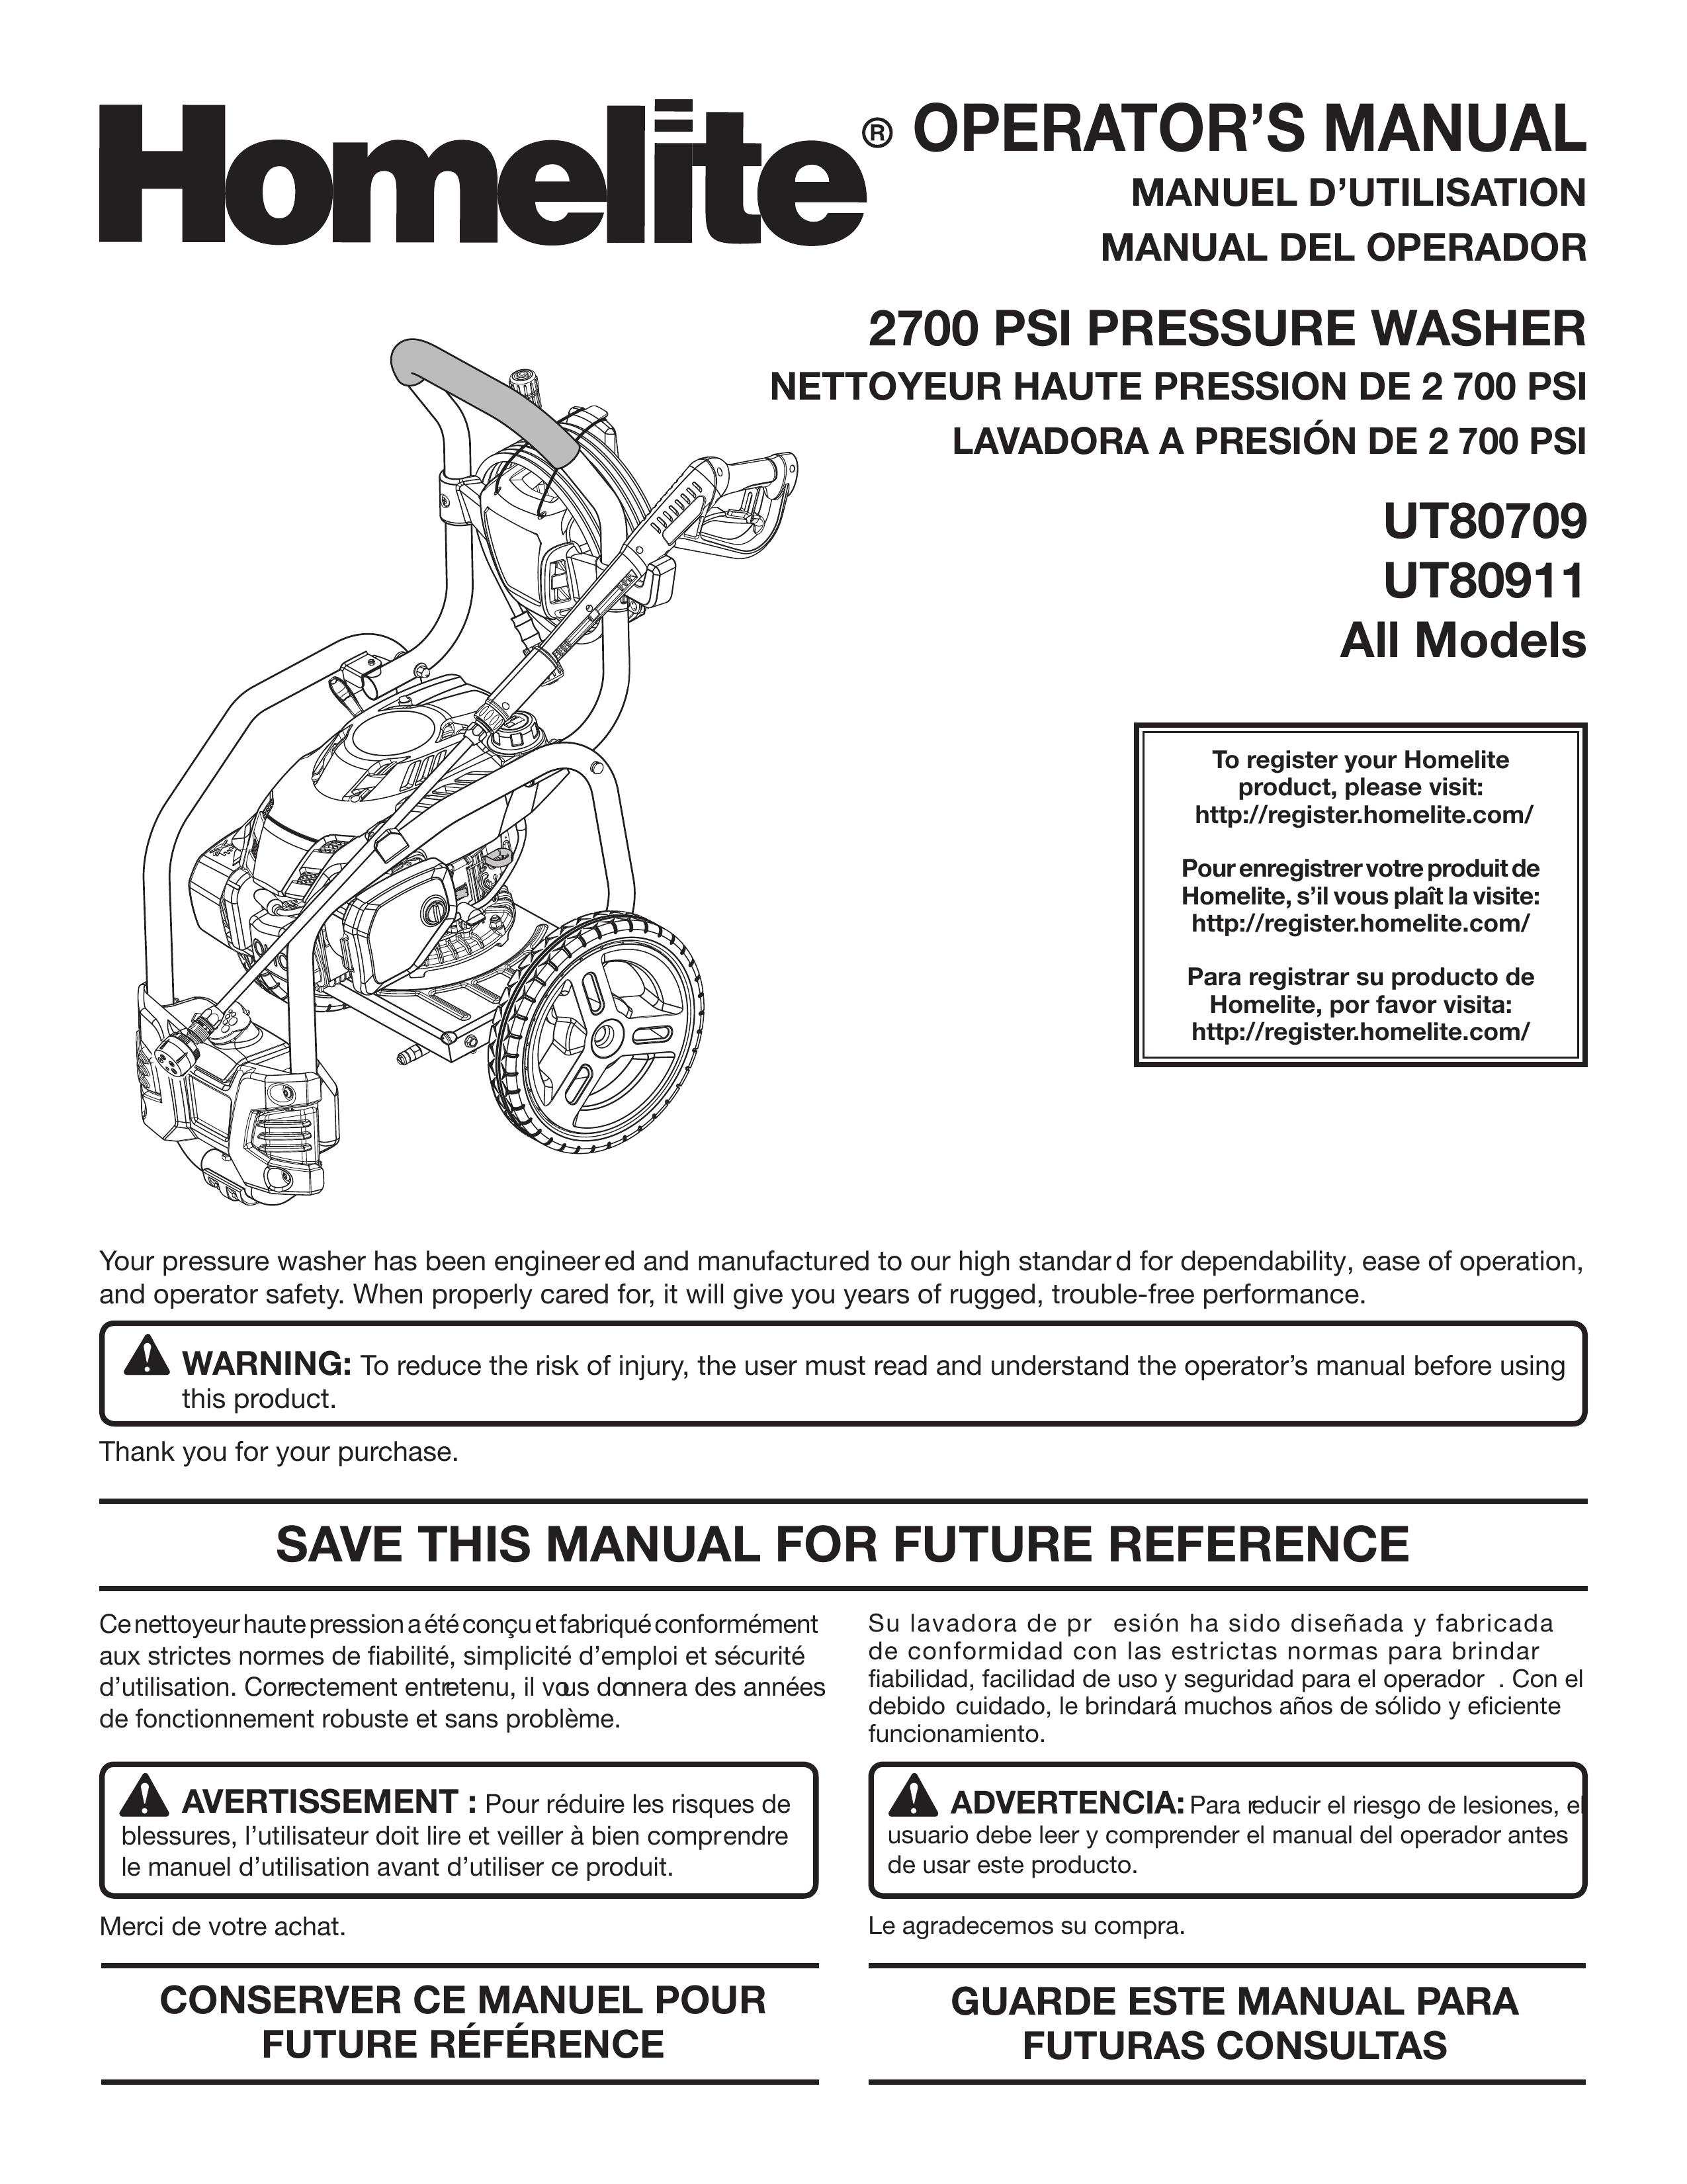 Homelite UT80911 Pressure Washer User Manual